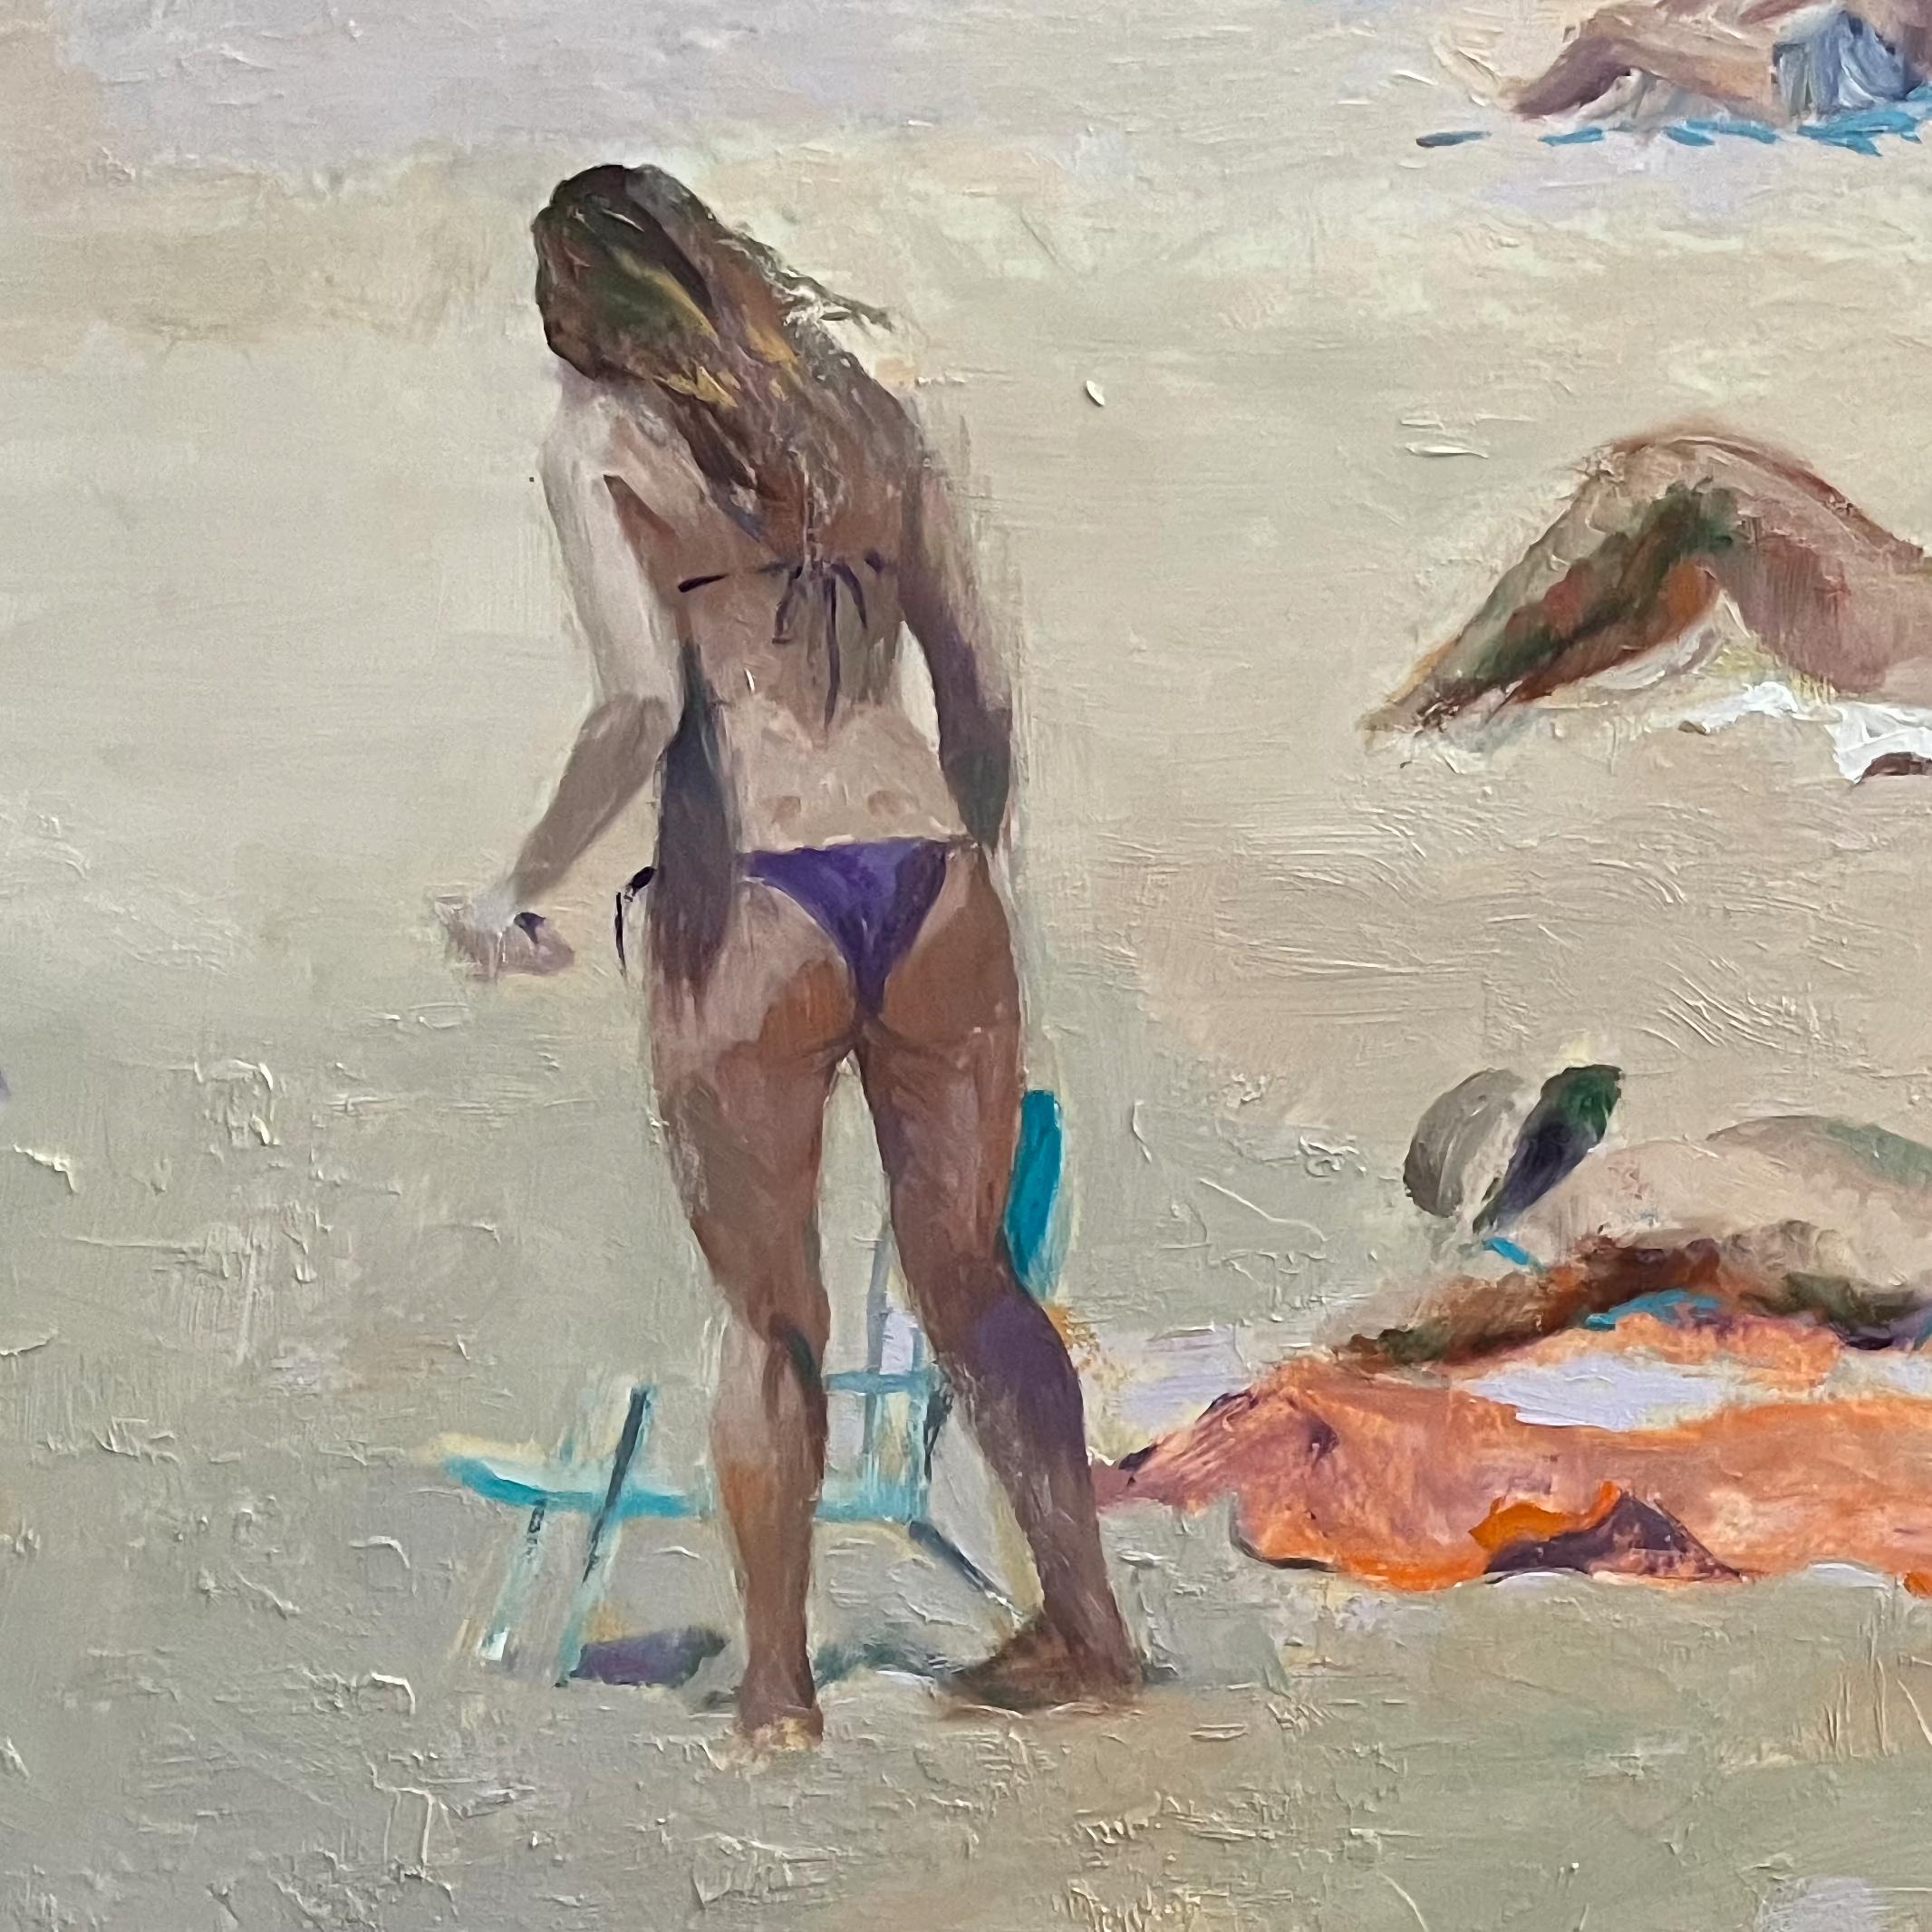 Bikiniland - Painting by Carole Garland